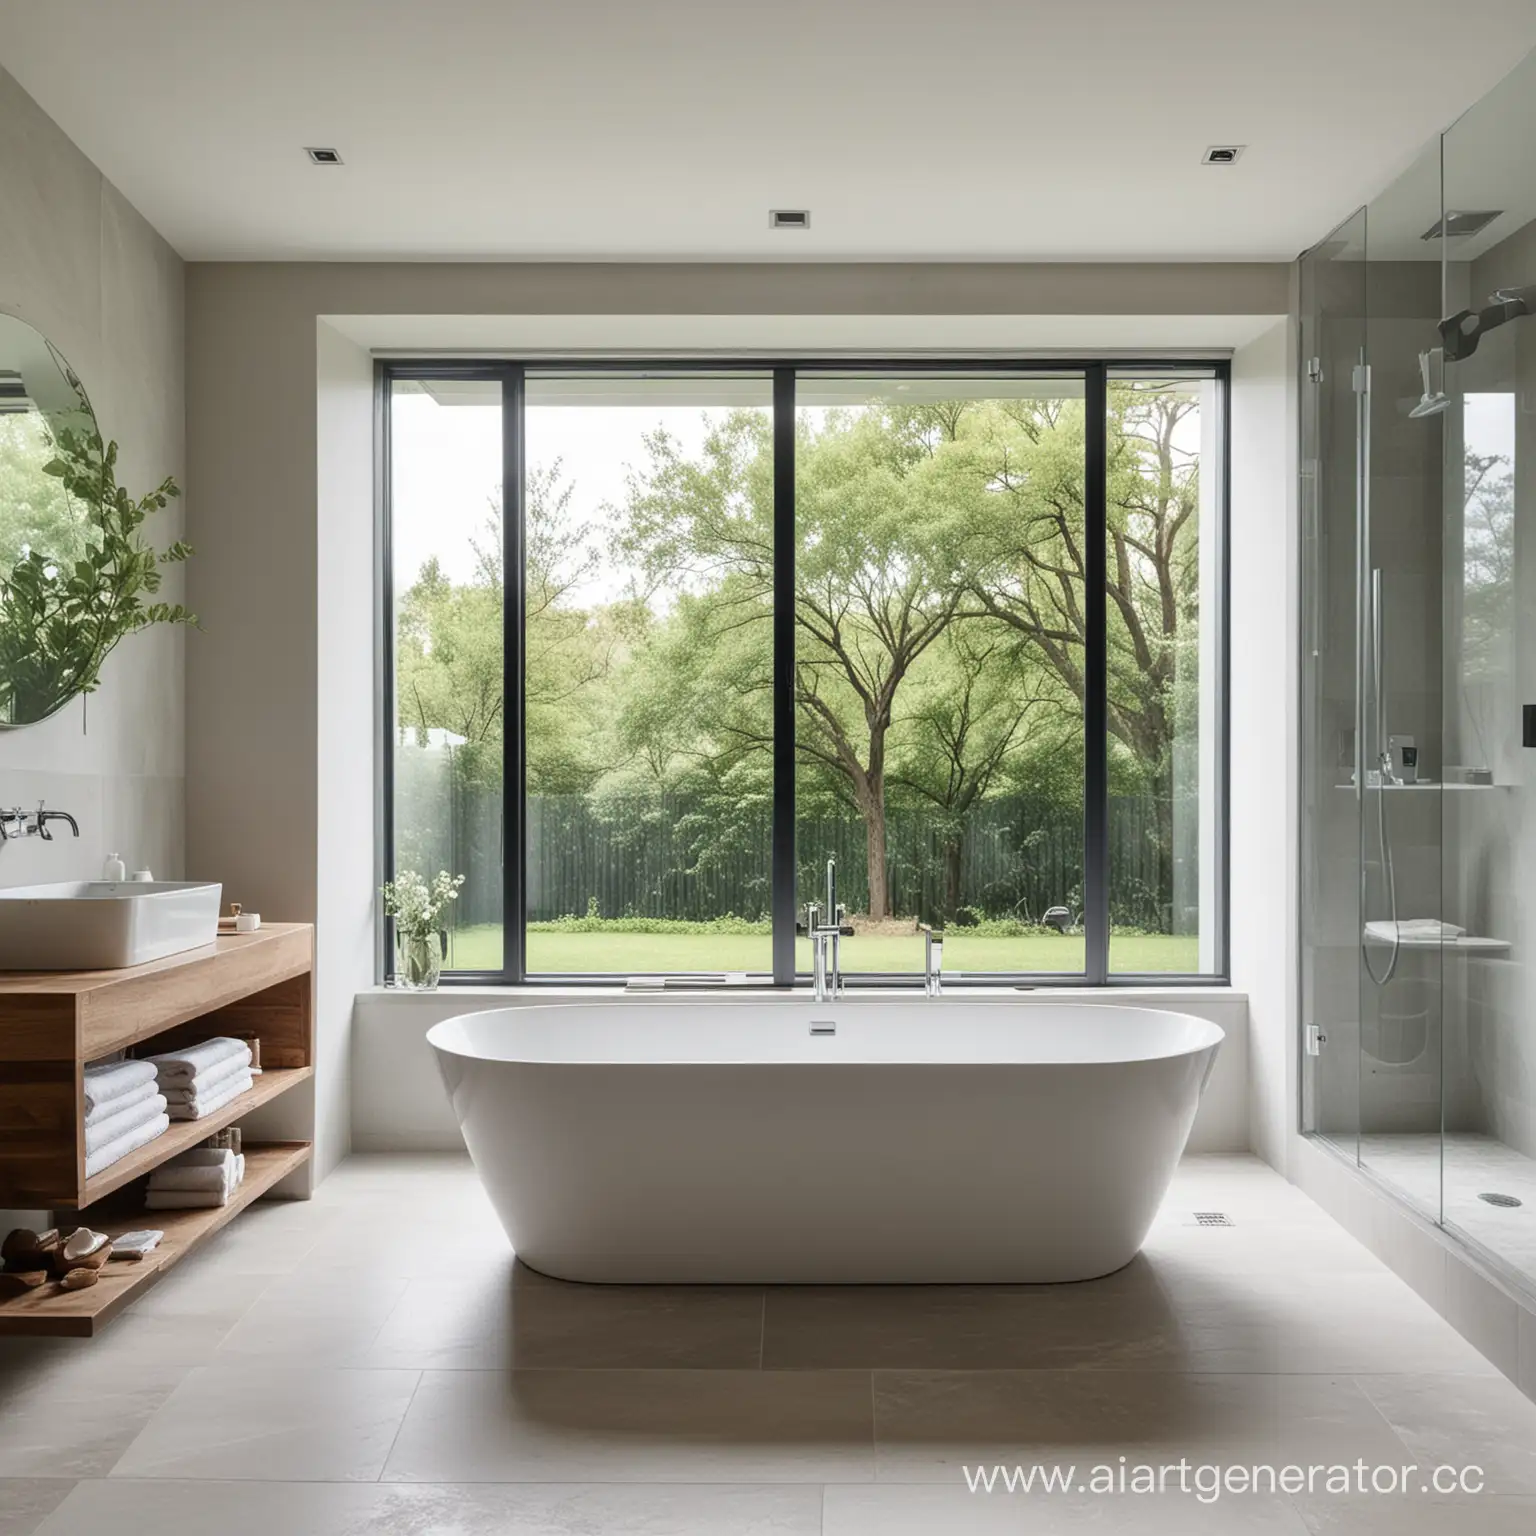 Modern-Bathroom-with-FloortoCeiling-Window-and-Freestanding-Tub